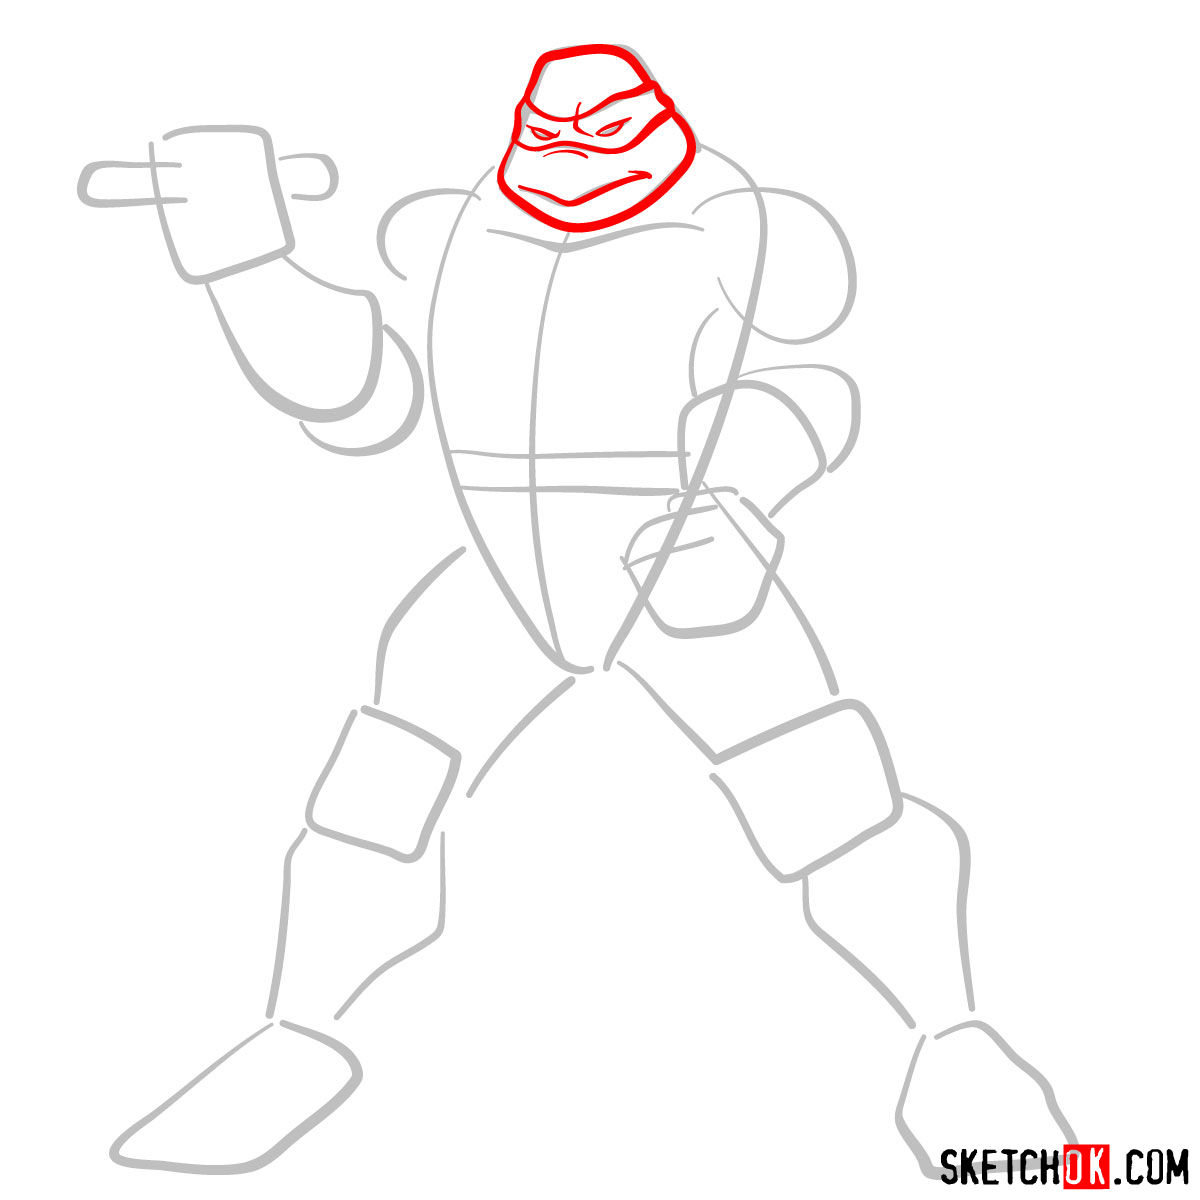 How to draw Michaelangelo ninja turtle - step 03